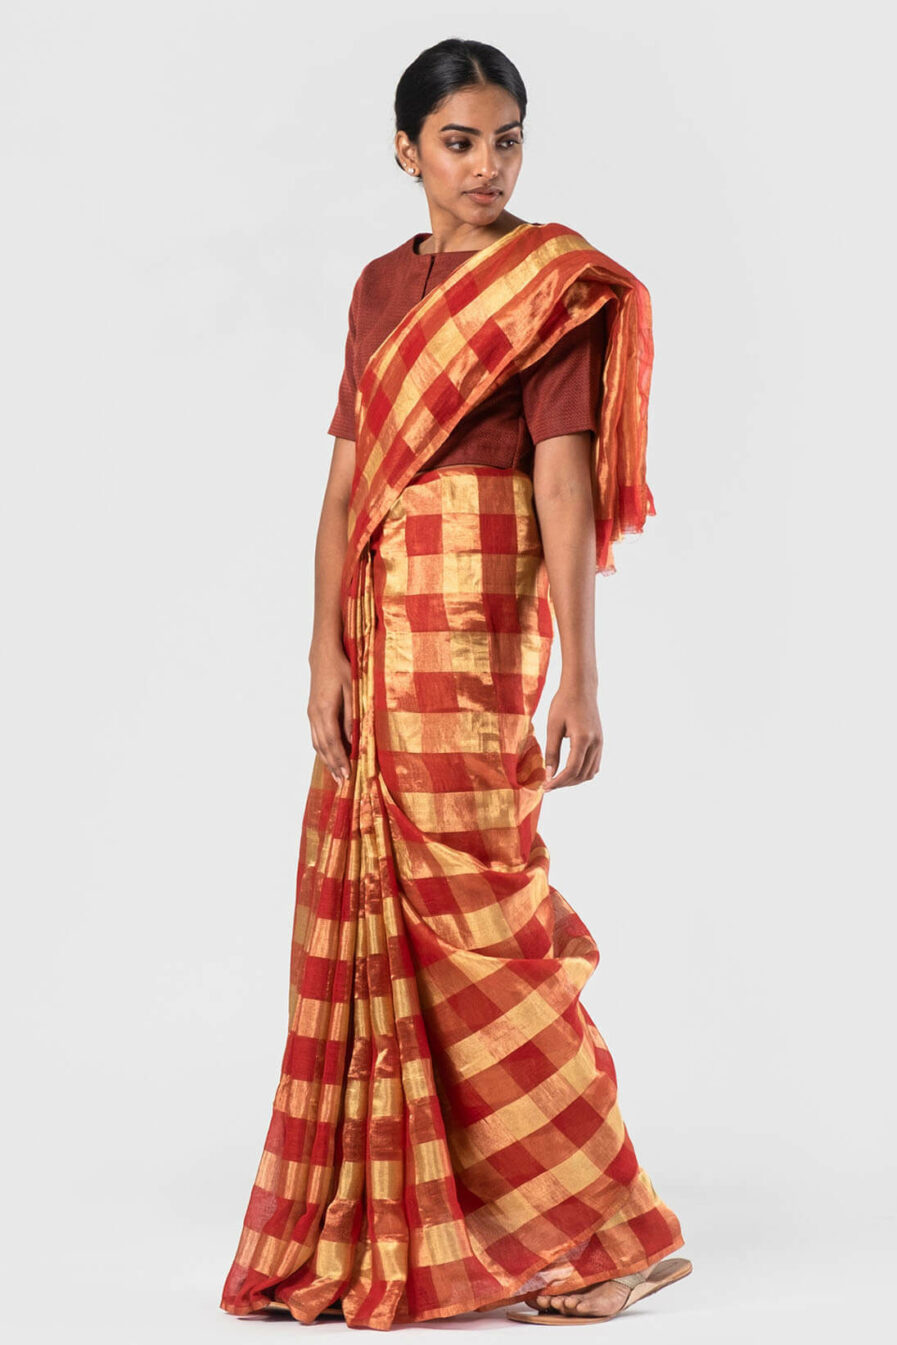 Anavila Red Gold checkered sari